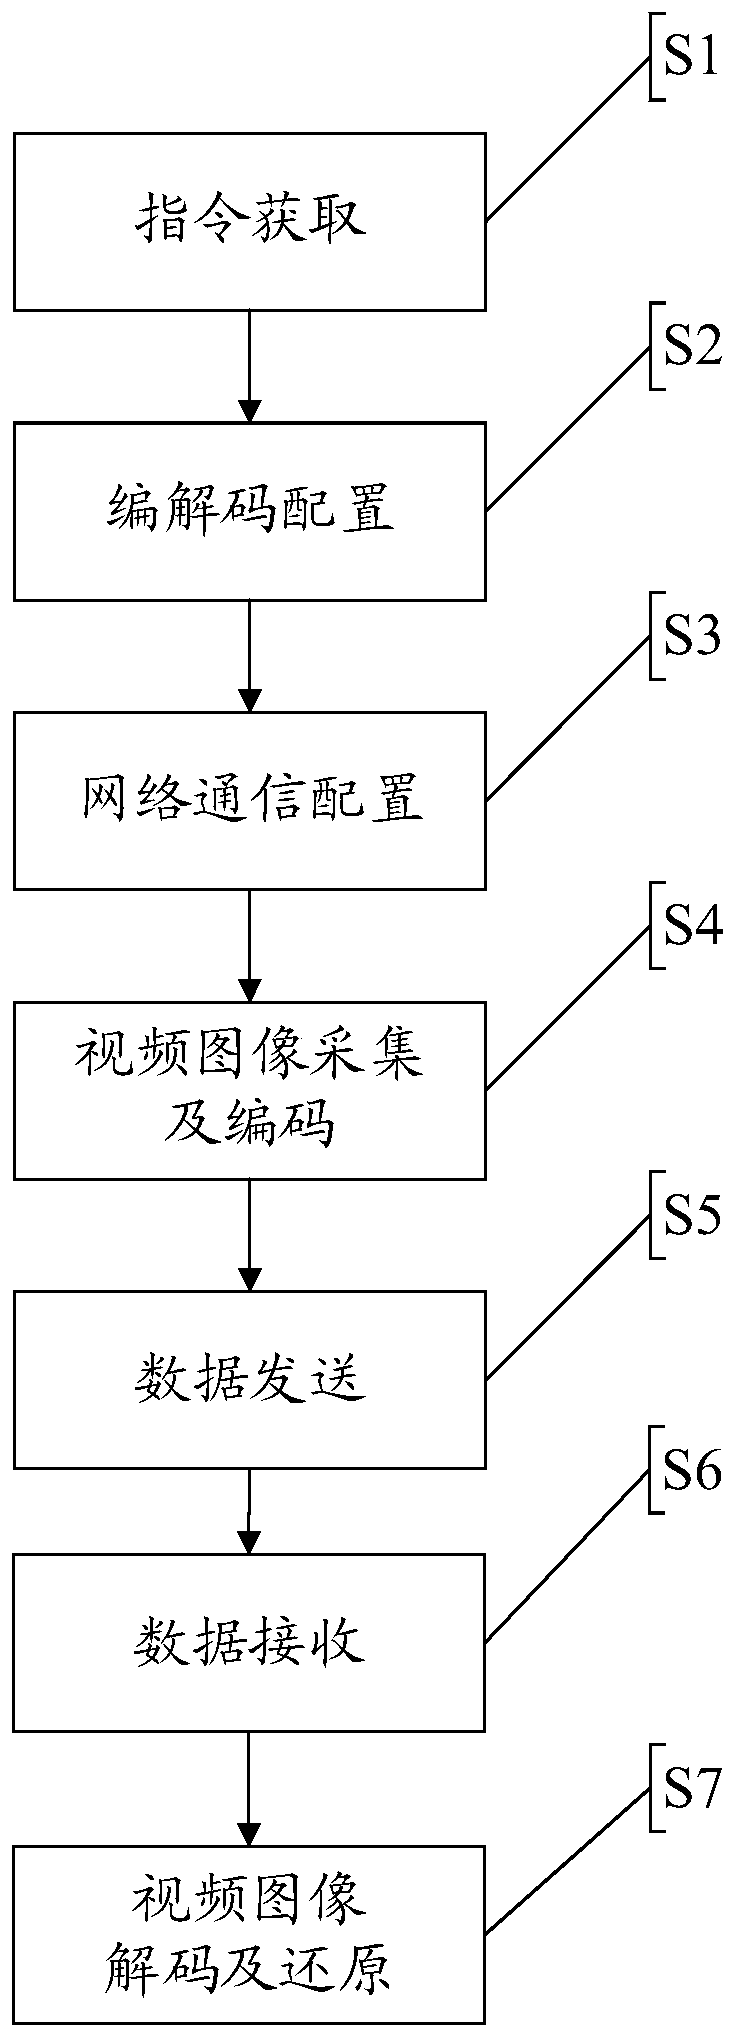 Image encoding and decoding and network transmission method and device based on FPGA